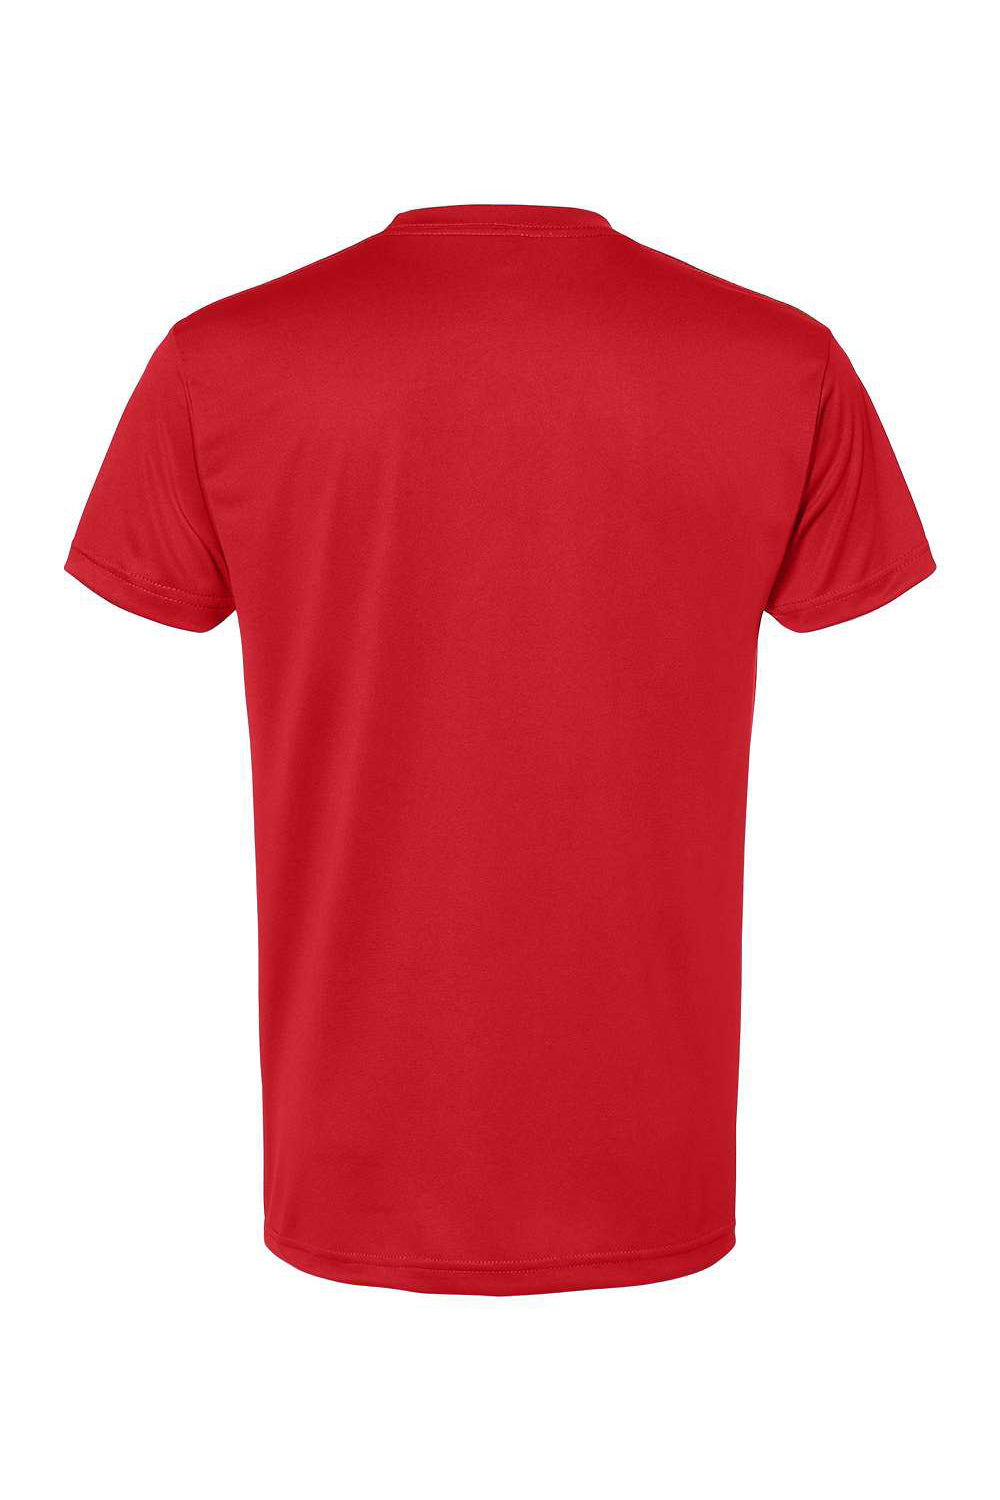 Bayside 5300 Mens USA Made Performance Short Sleeve Crewneck T-Shirt Red Flat Back